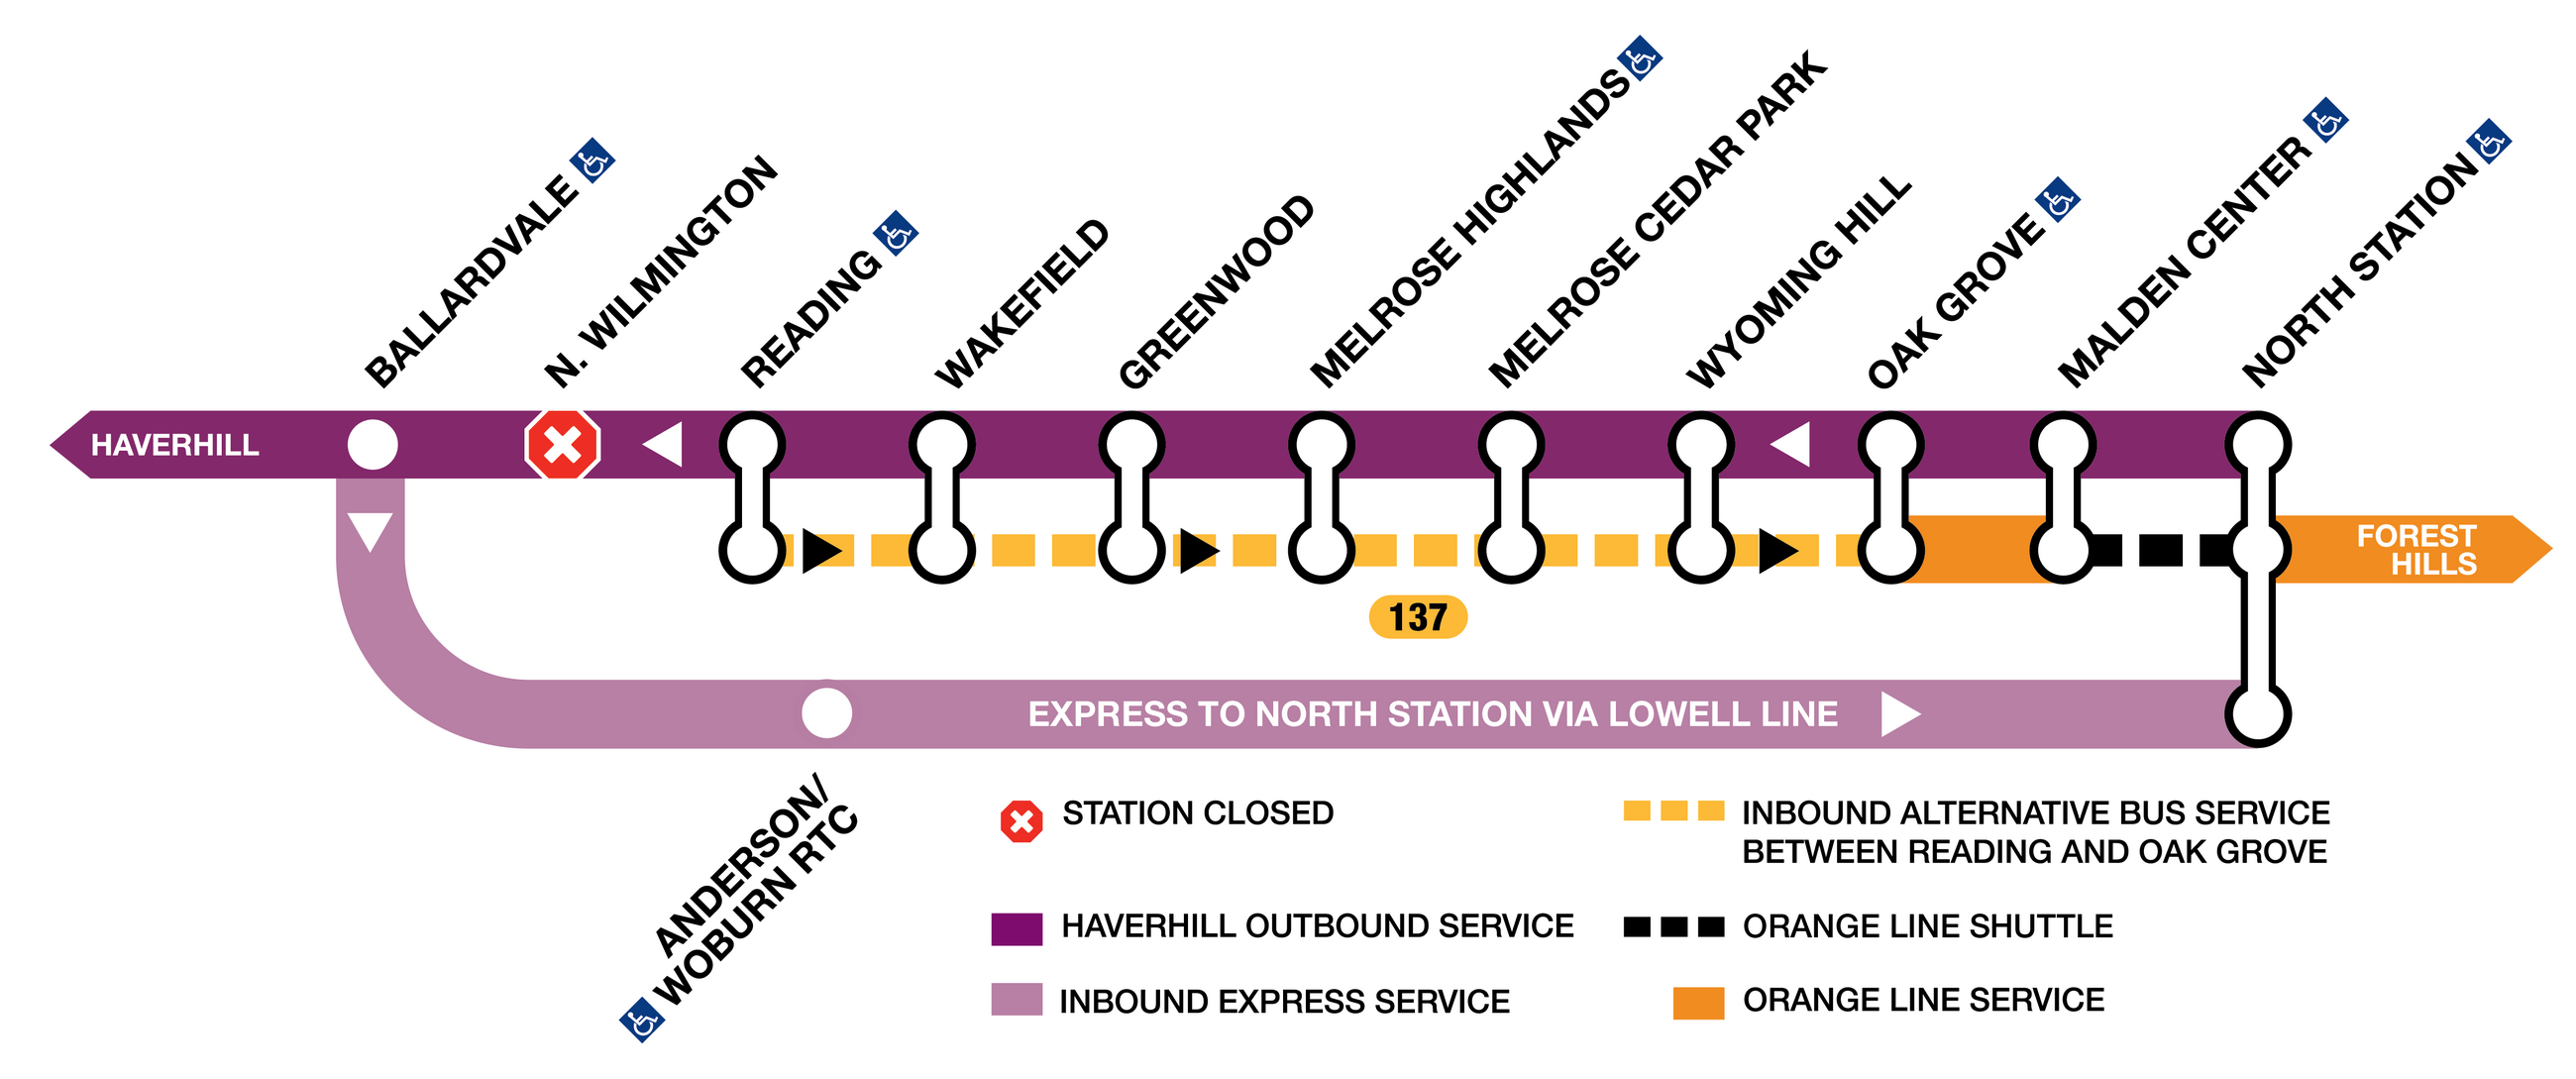 Orange Line diversion diagram with shuttle and Commuter Rail service